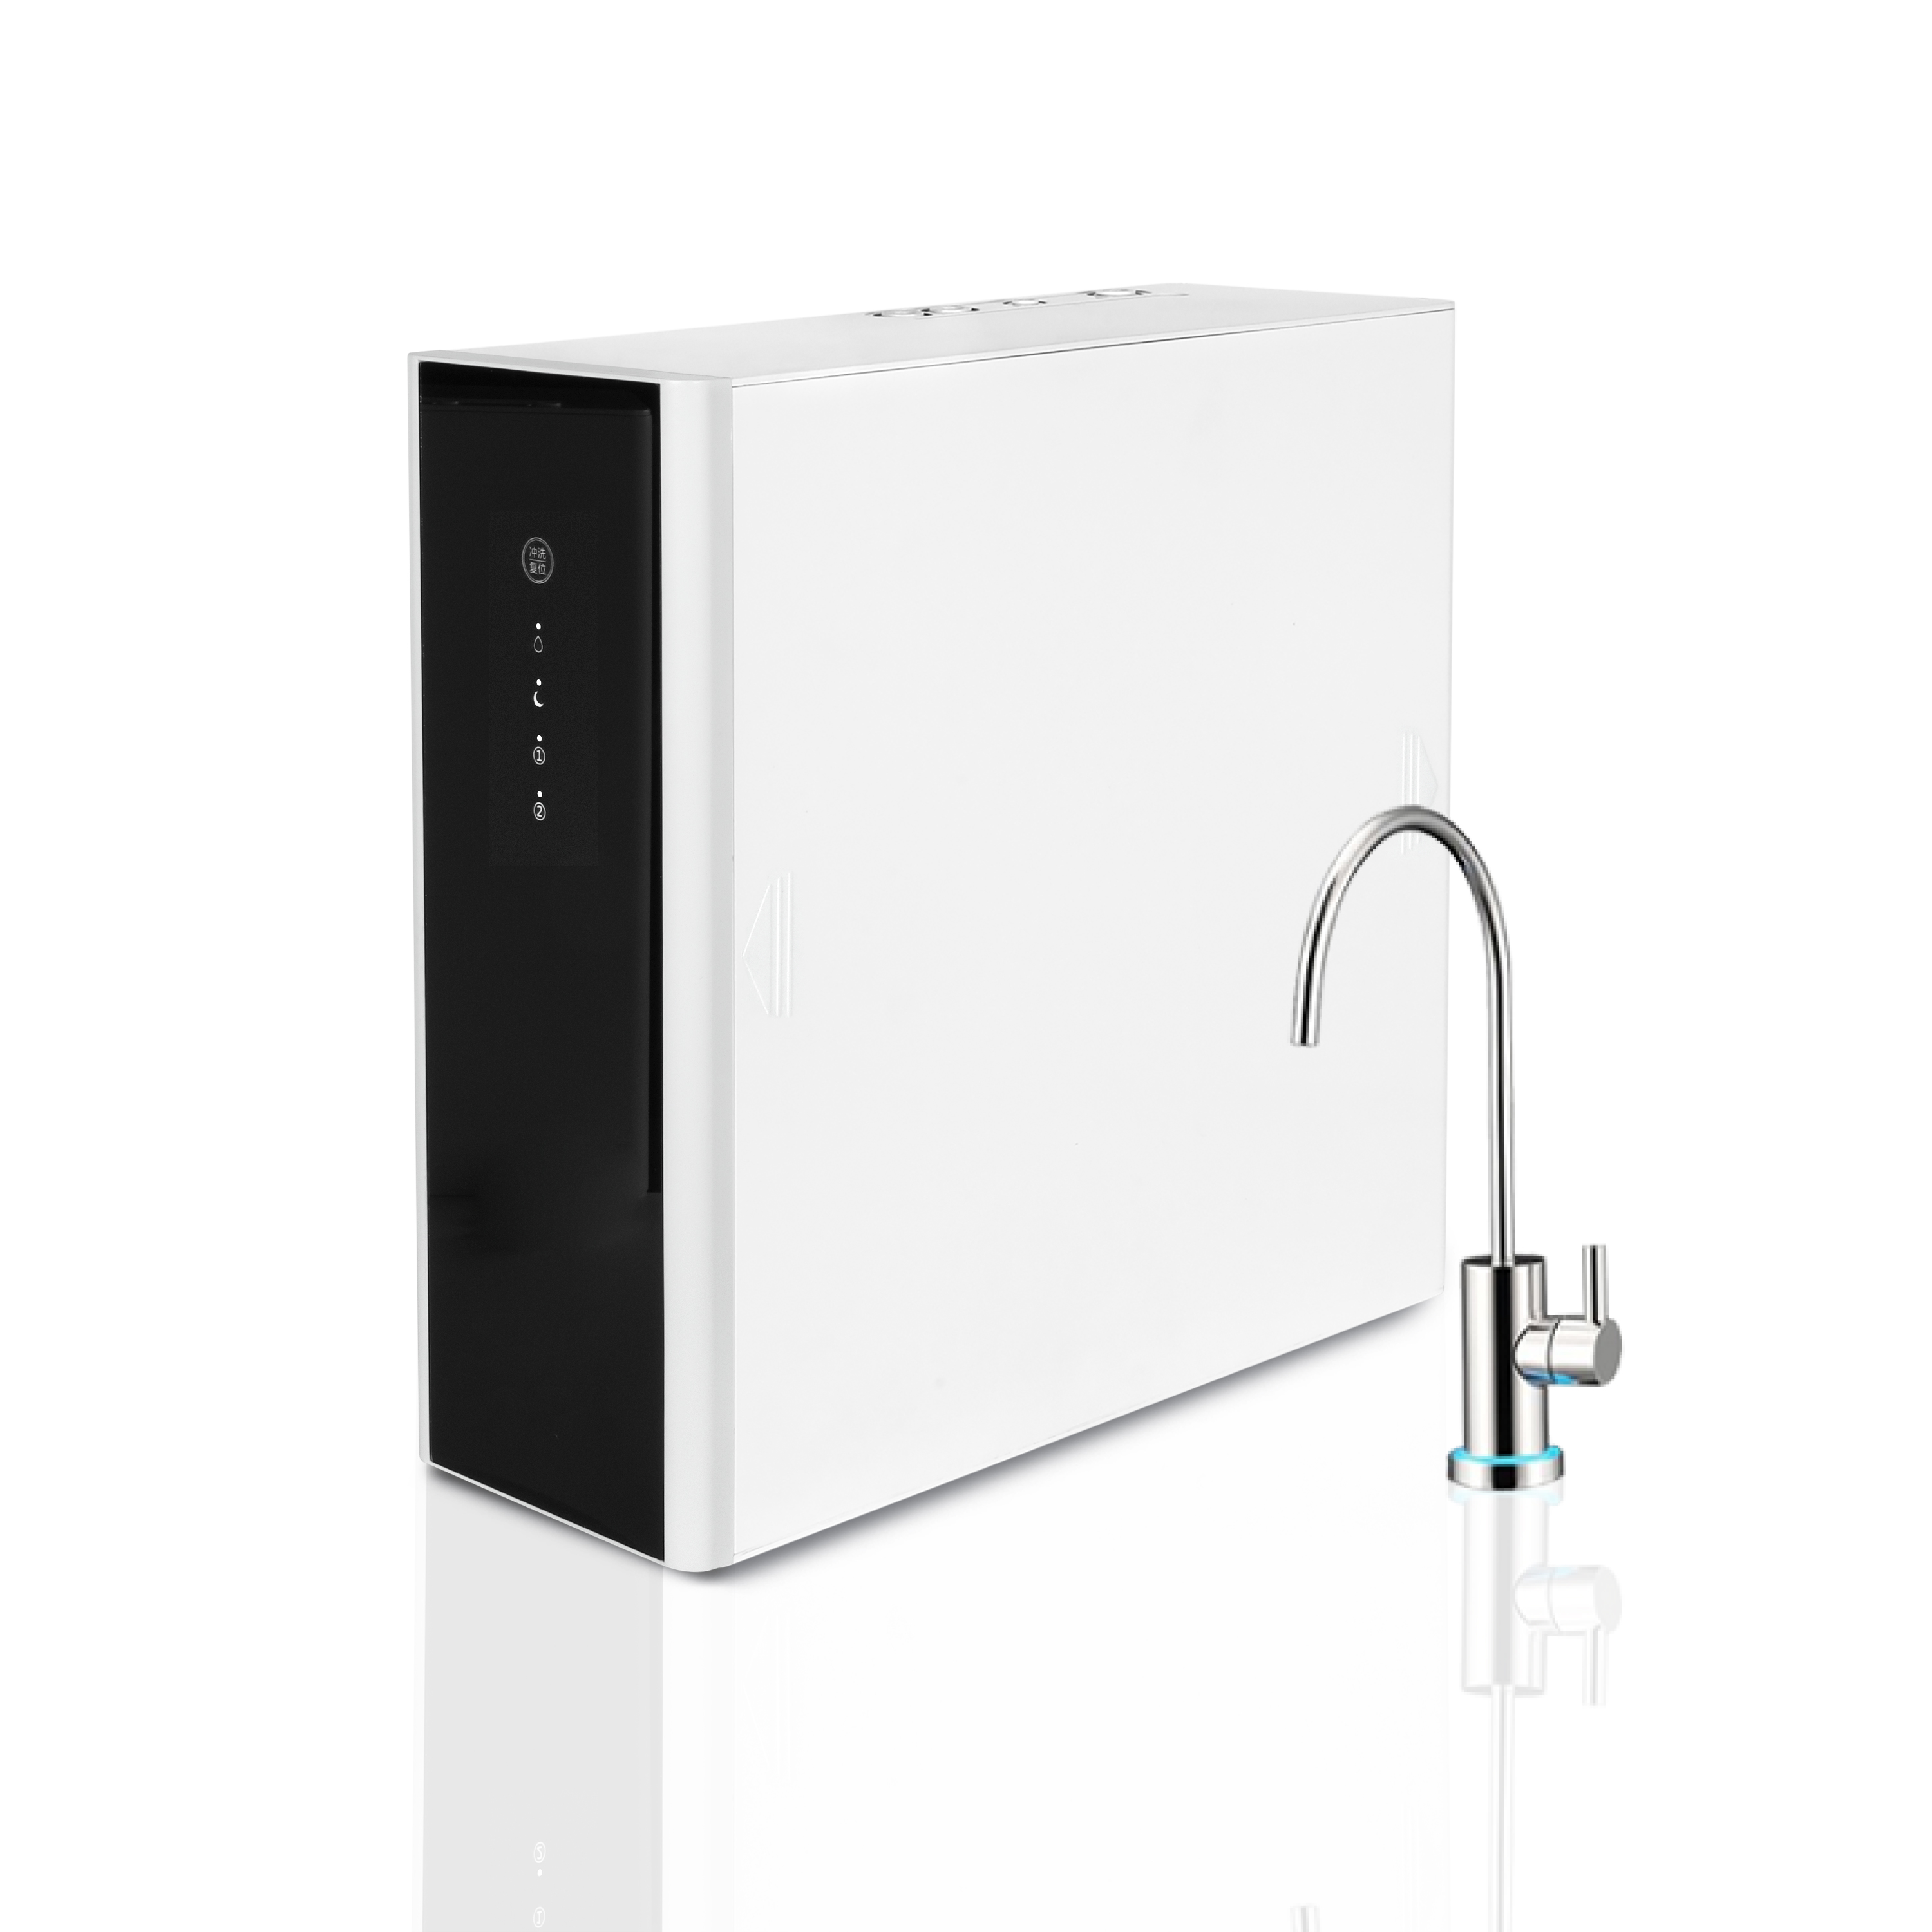 https://www.filterpur.com/undersink-ro-water-purifier-600-1000-gdp-customized-product/